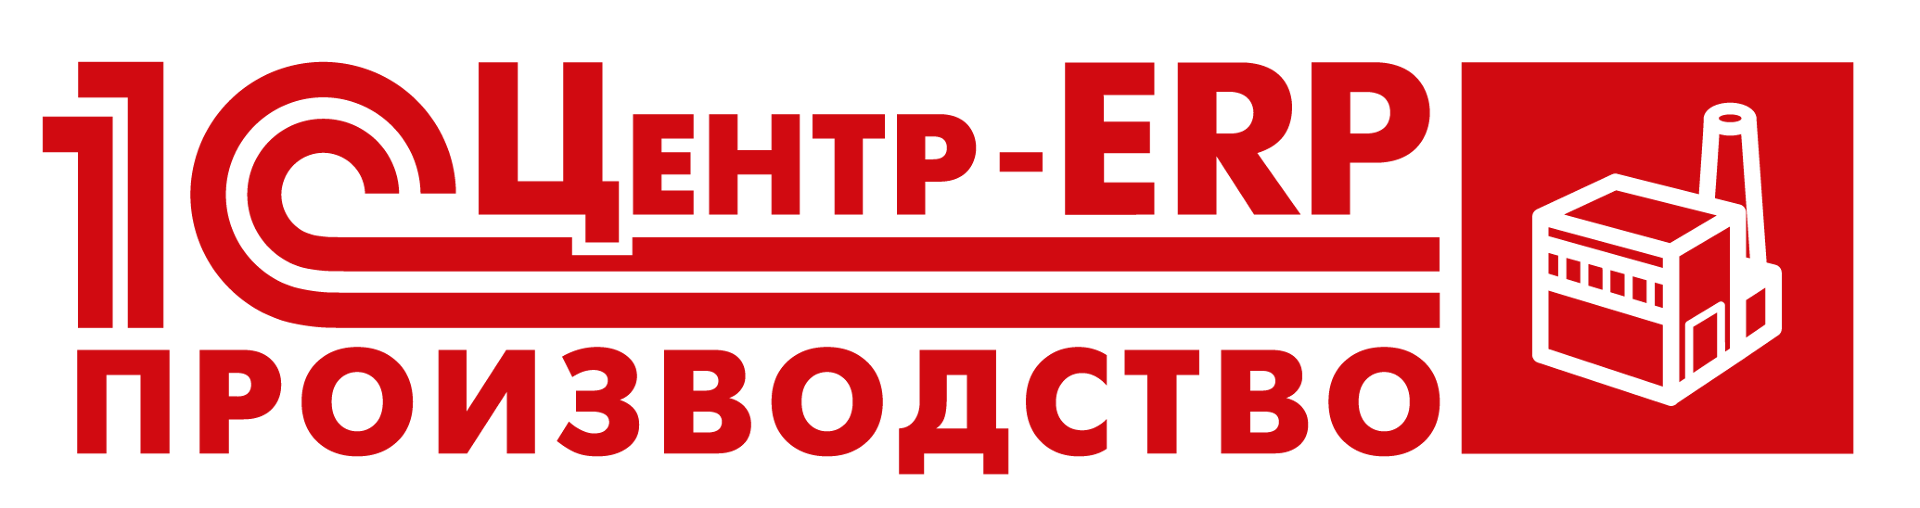 Центр-ERP производство